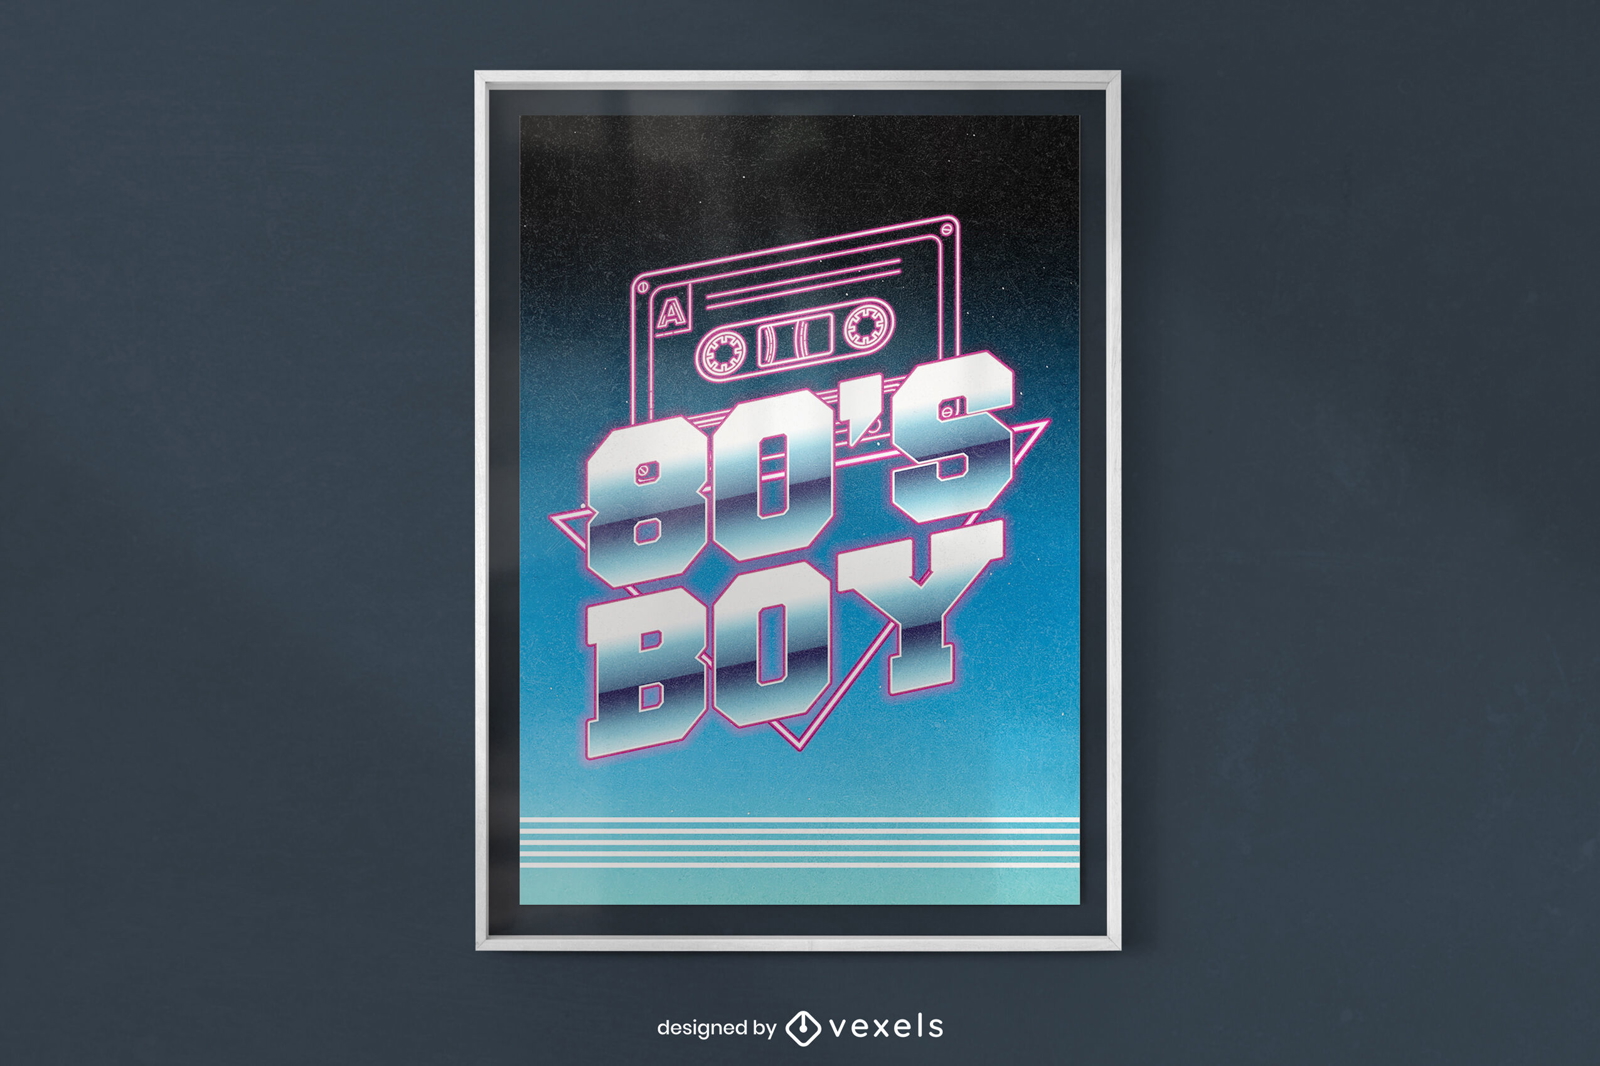 Retro 80's boy poster design